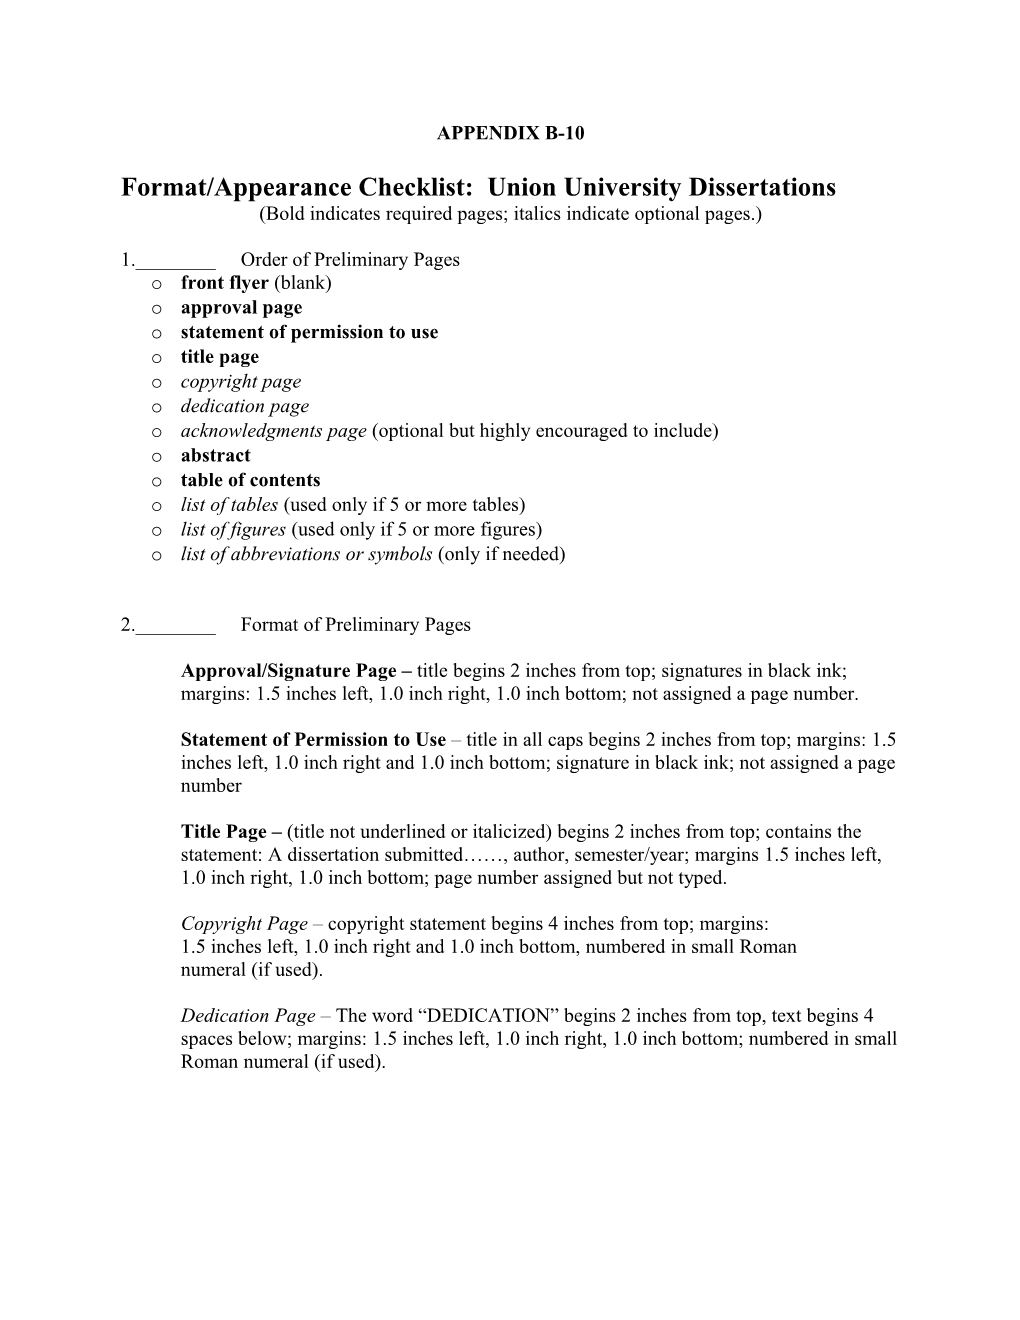 Format/Appearance Checklist: Union University Dissertations